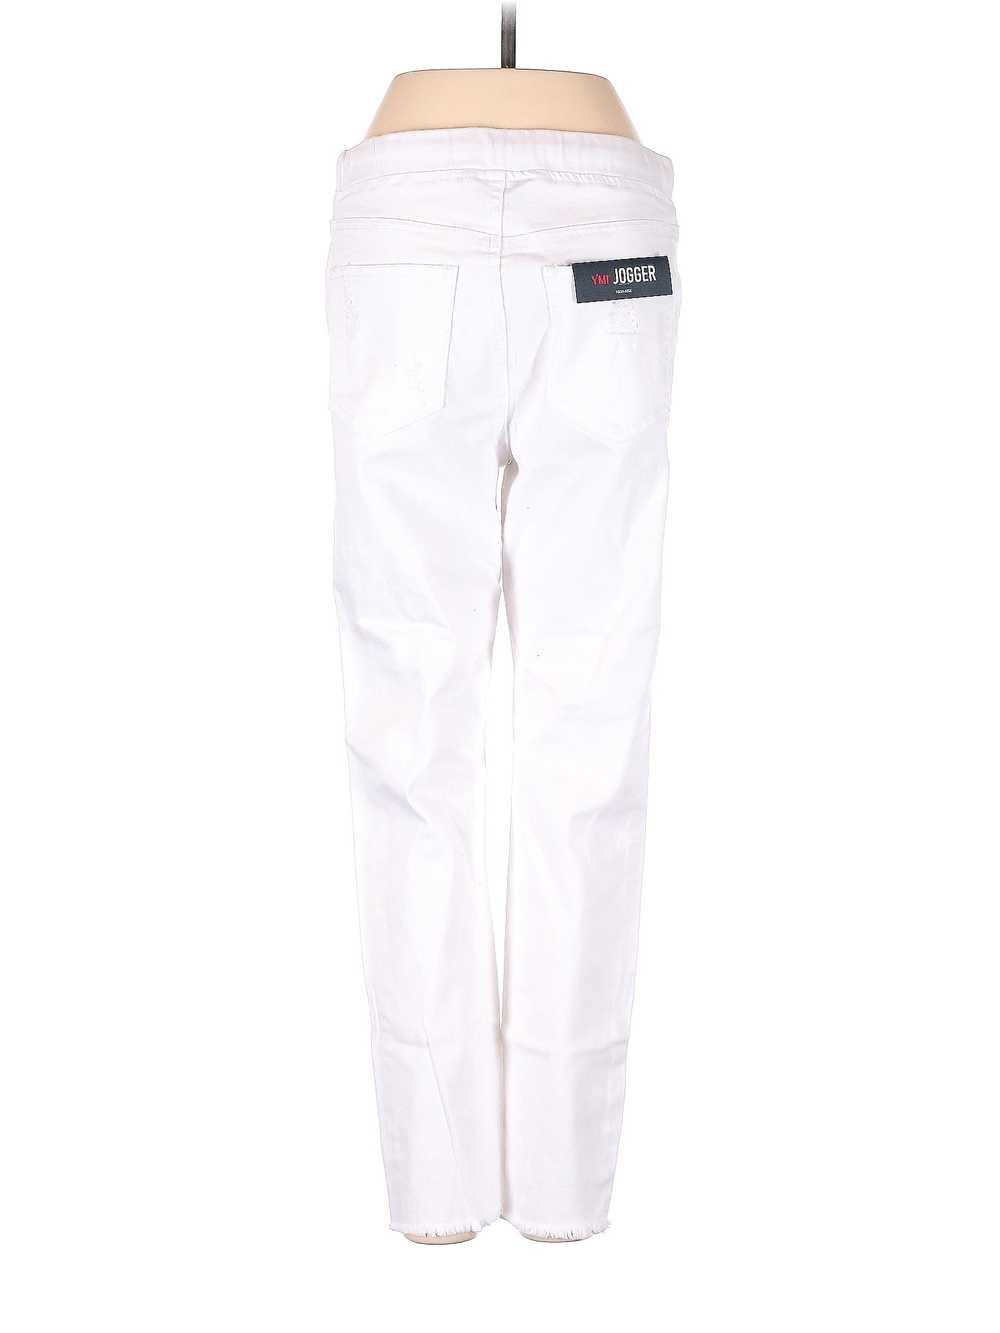 YMI Women White Jeans S - image 2